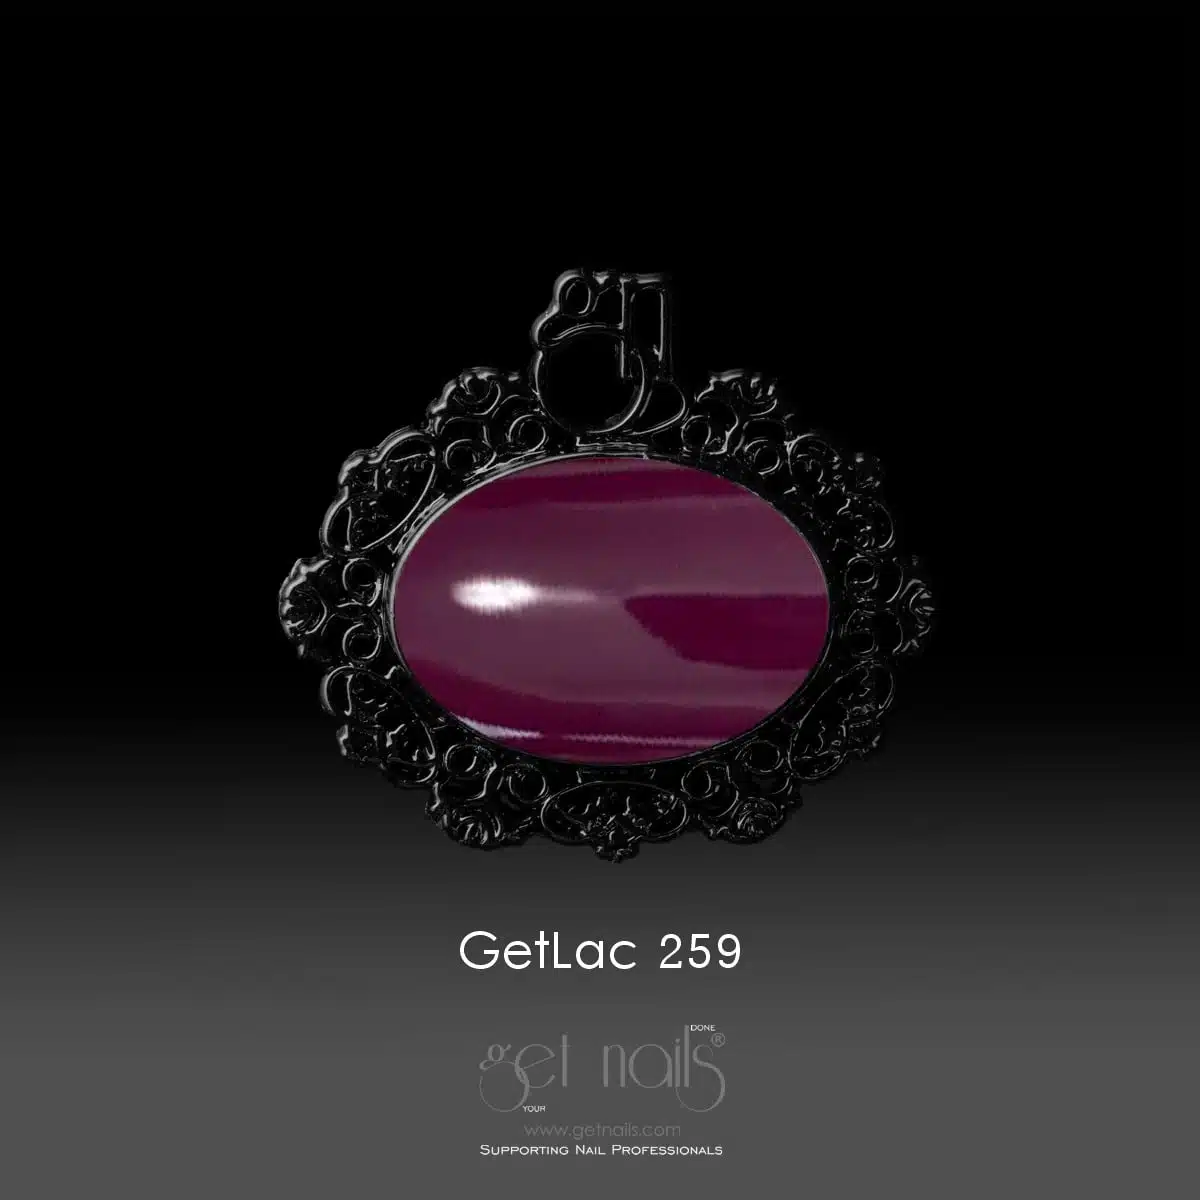 Get Nails Austria - GetLac 259 15g